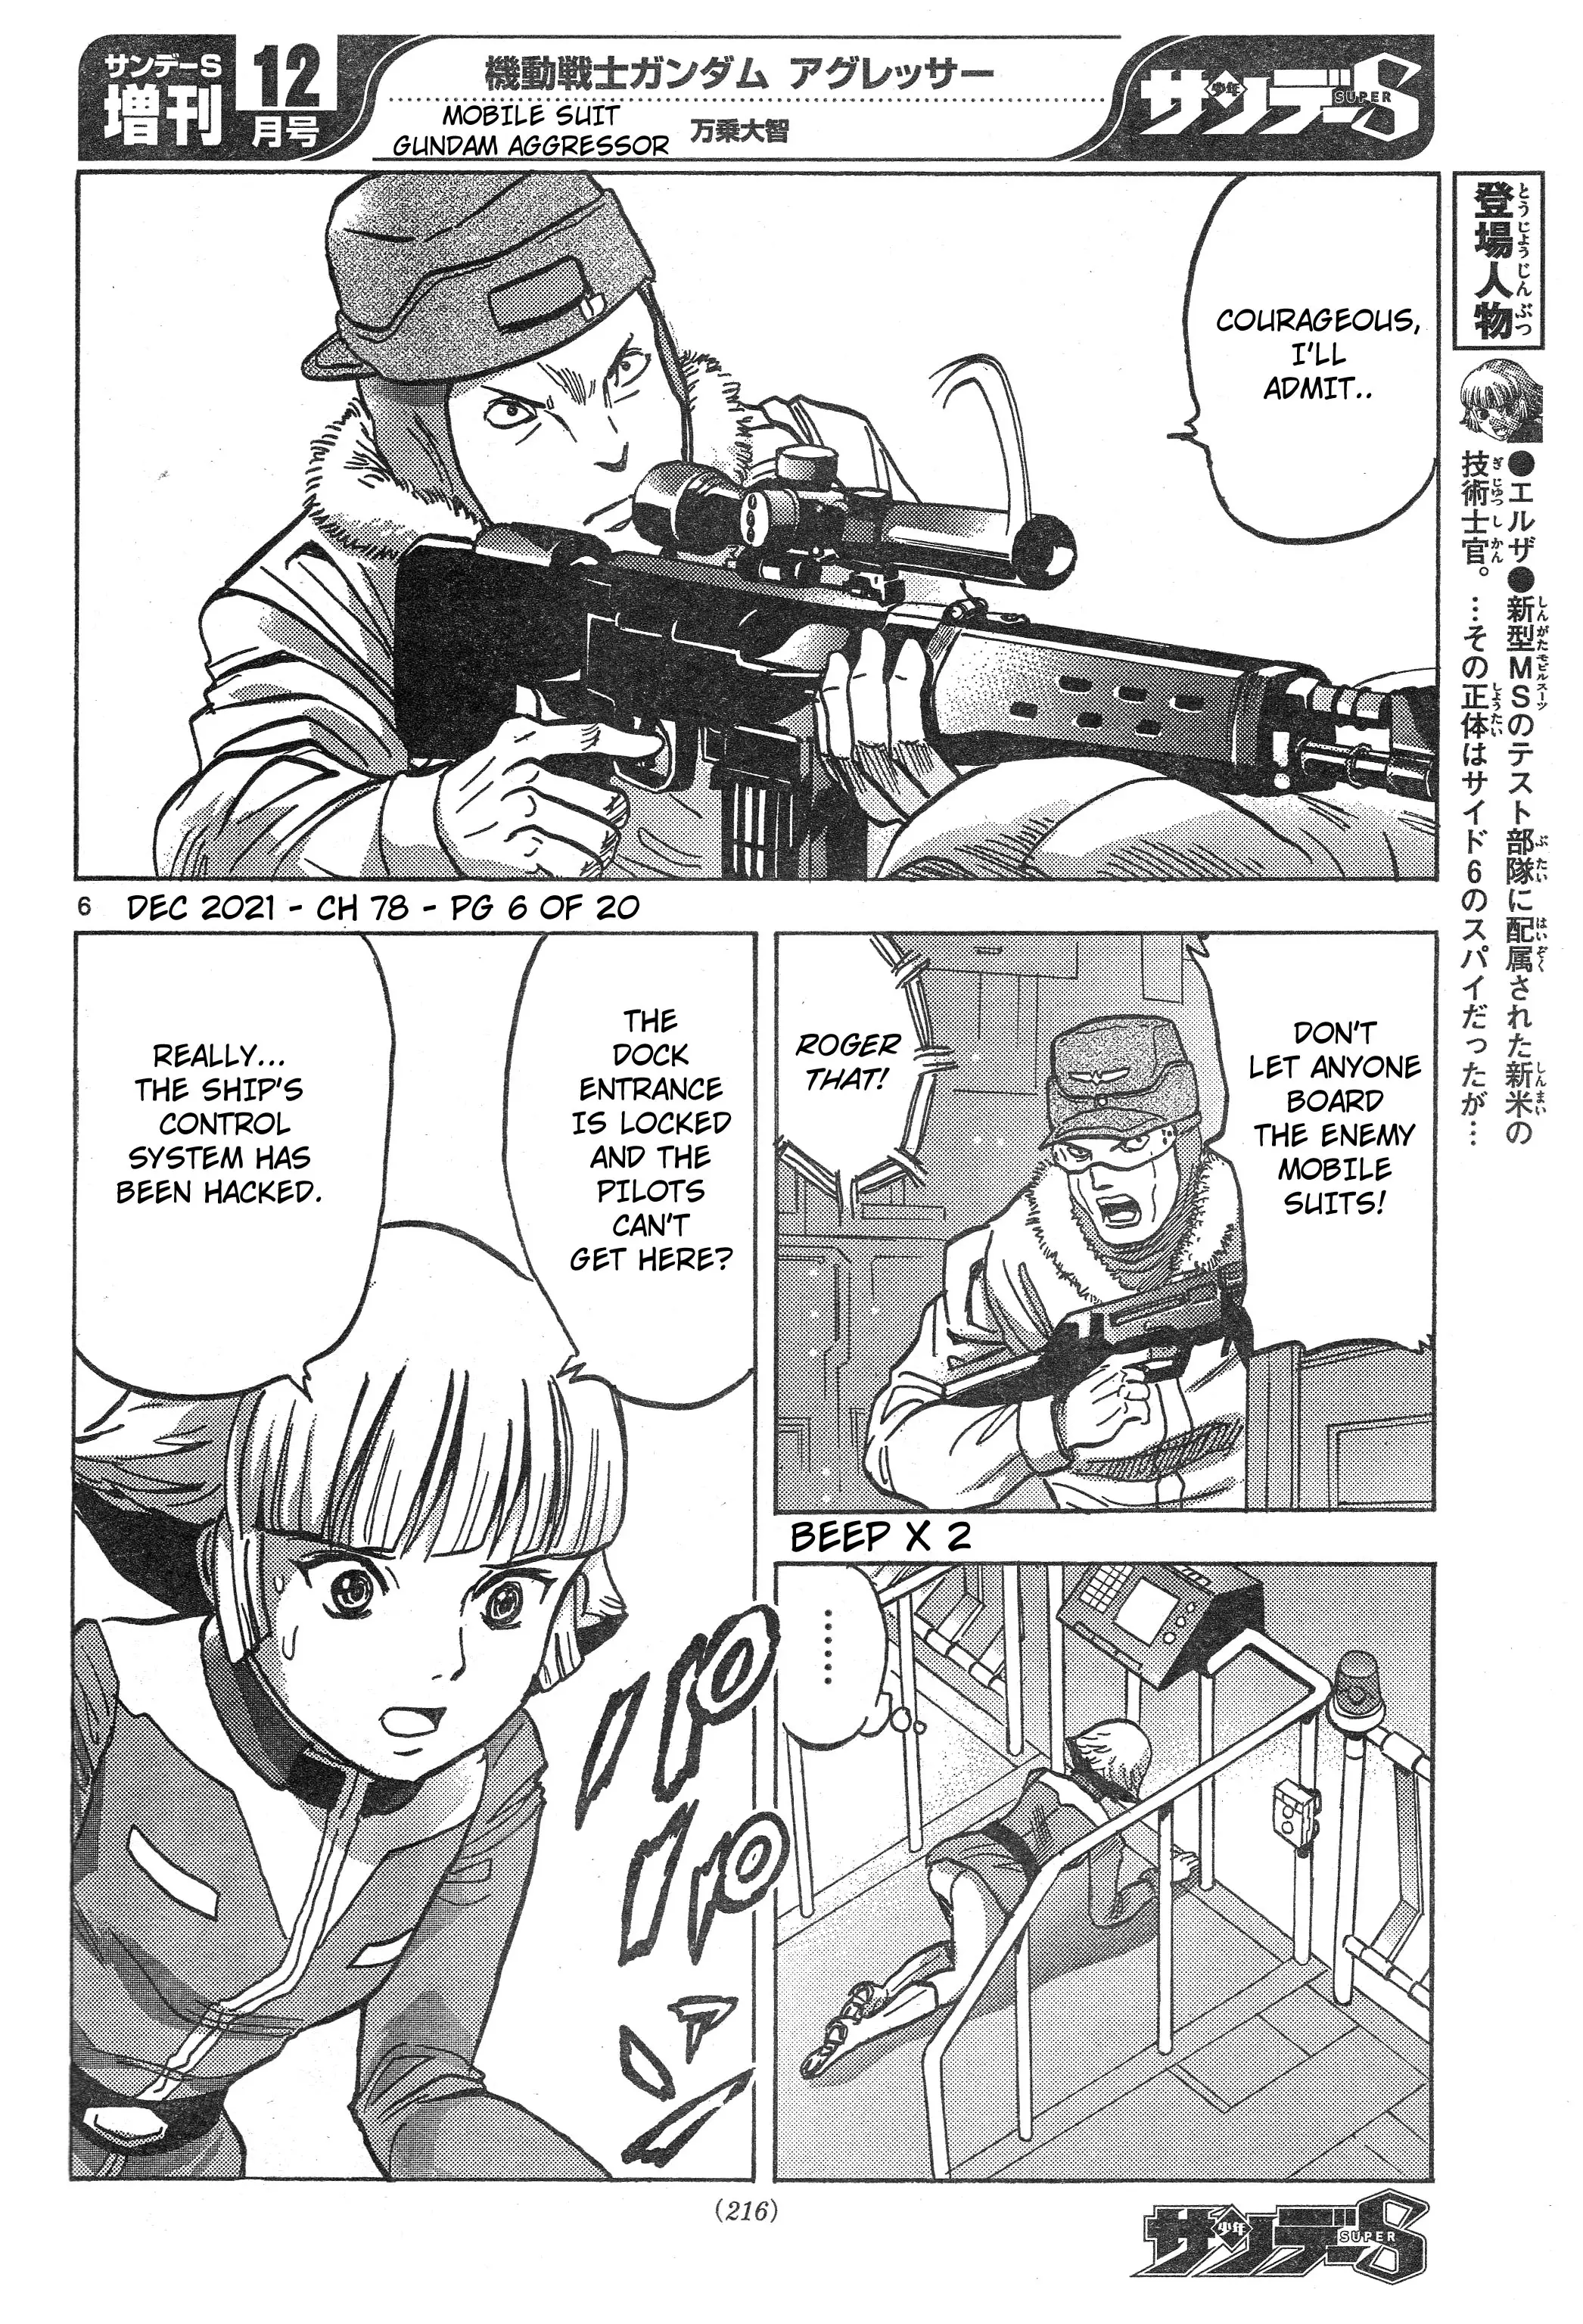 Mobile Suit Gundam Aggressor - 78 page 6-3120dd75